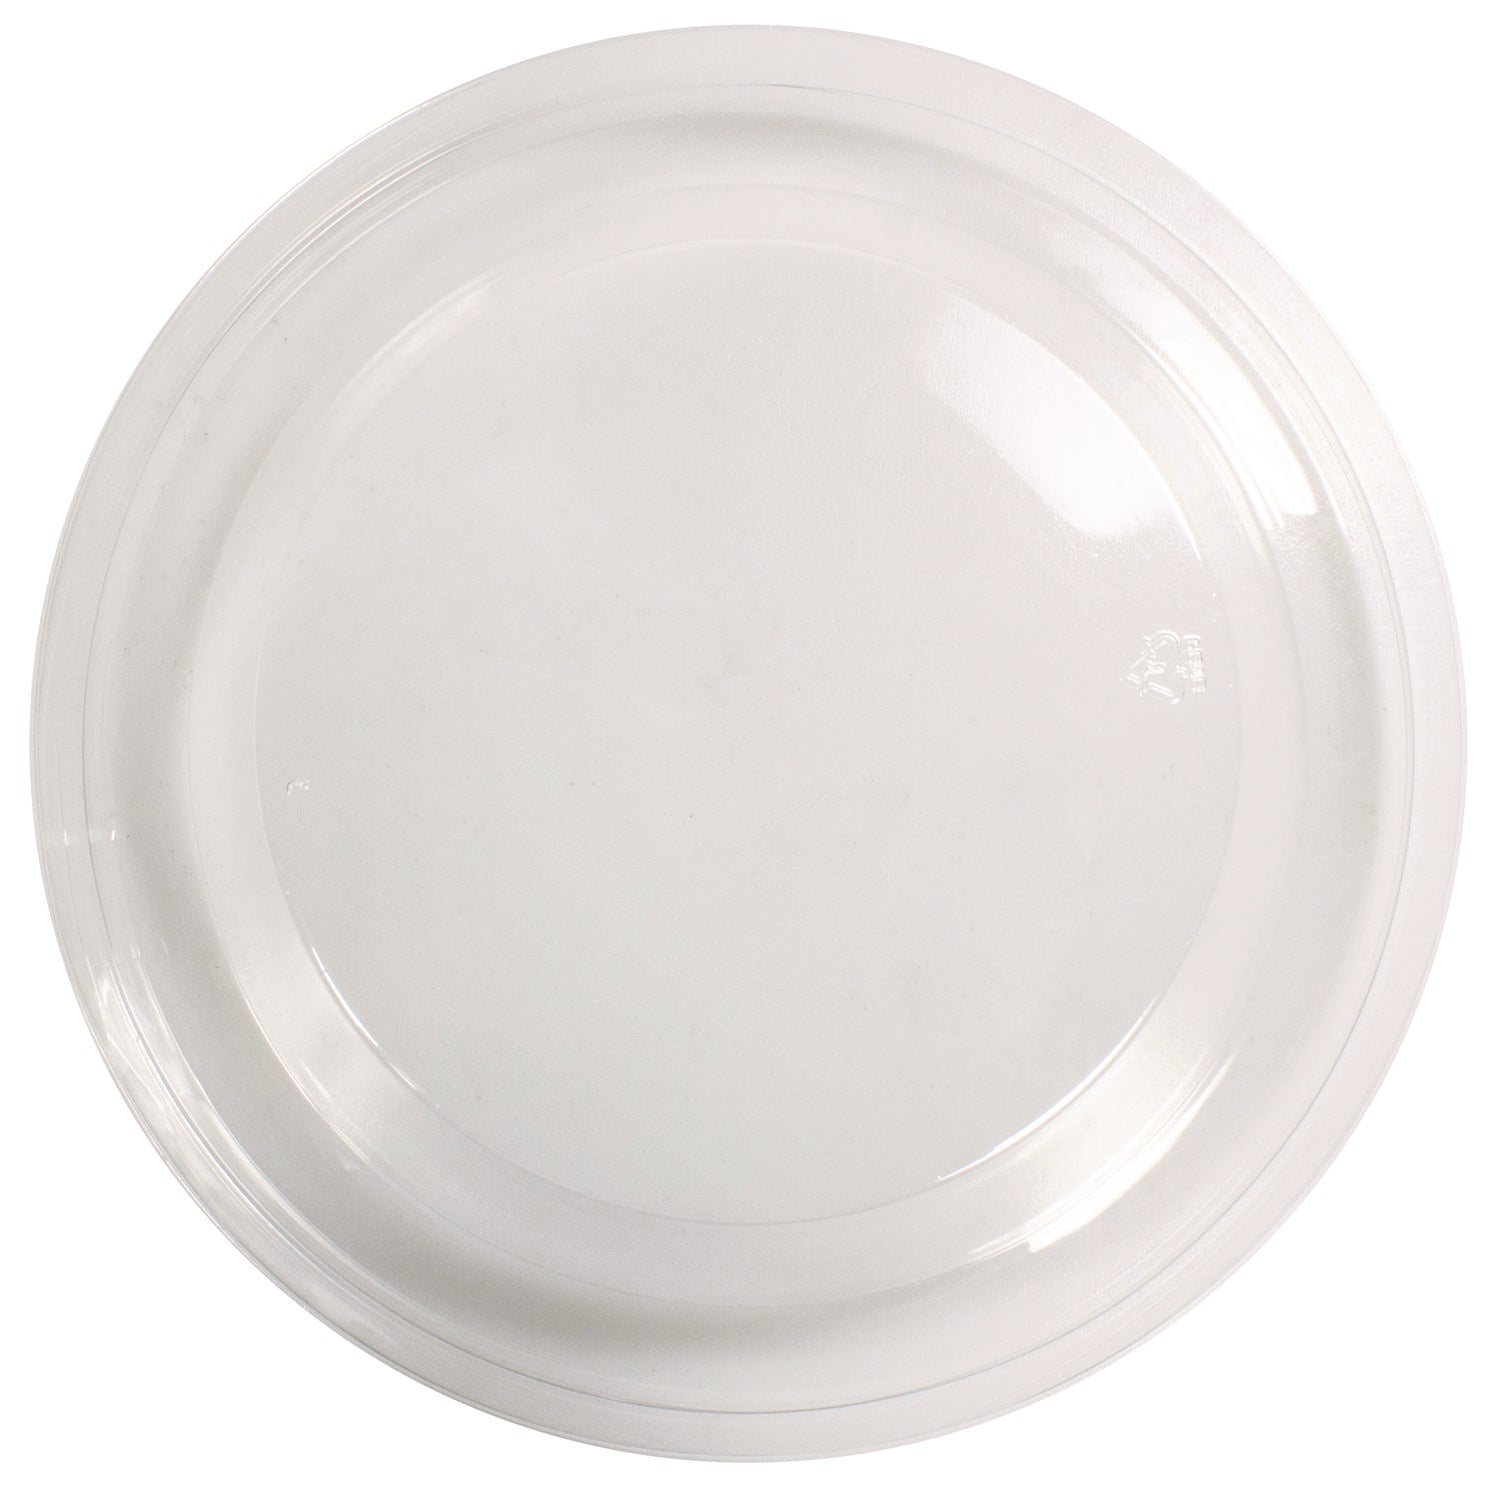 dome-lid-for-aluminum-baking-cups-331-diameter-clear-1000-carton_hfa4062dl - 2